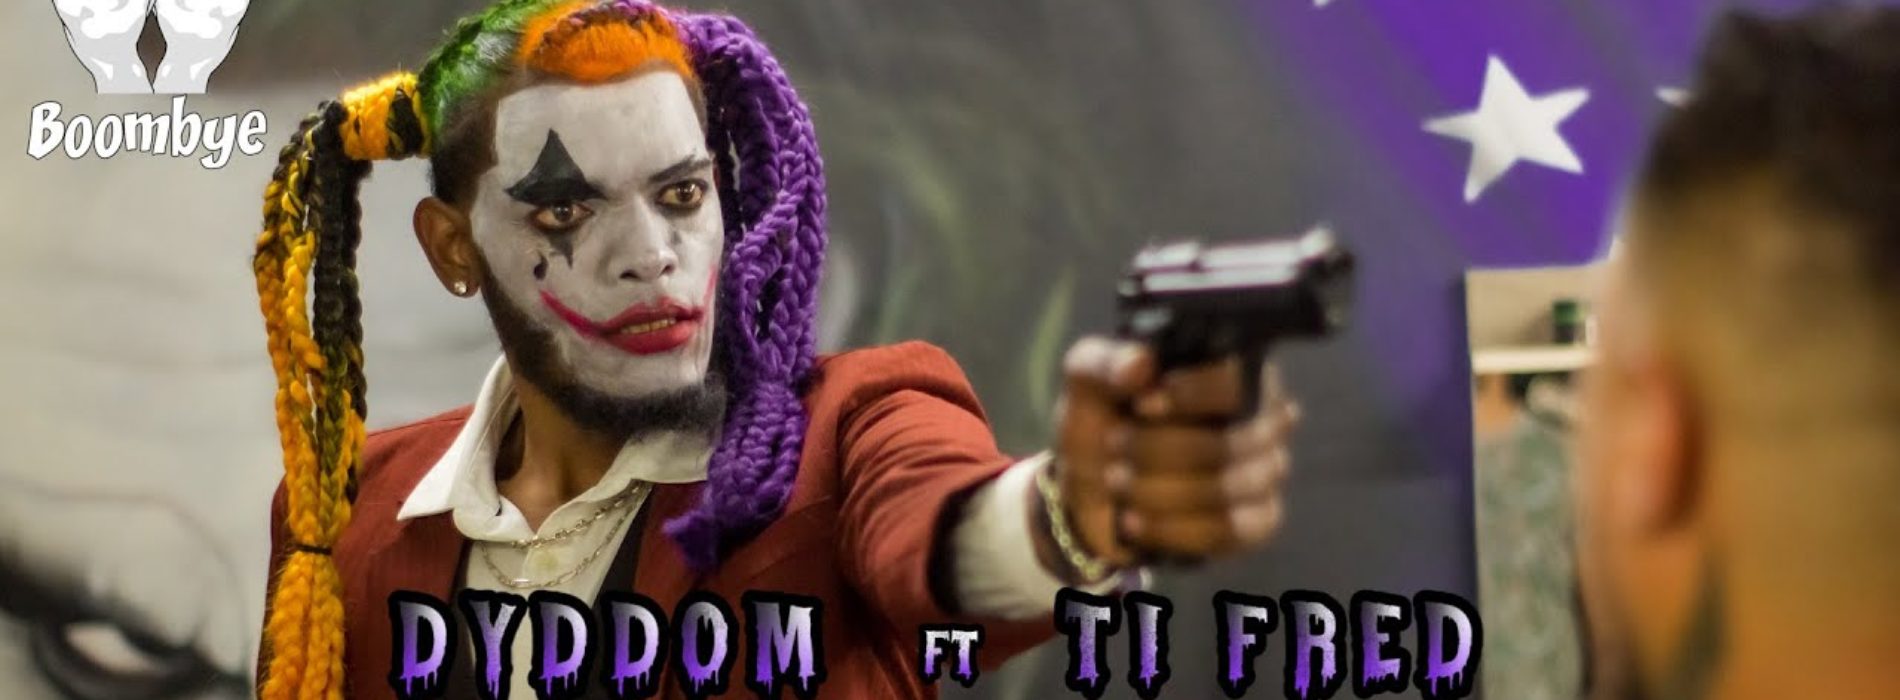 DYDDOM ft TI FRED – Joker (DLSIII)  – Novembre 2020